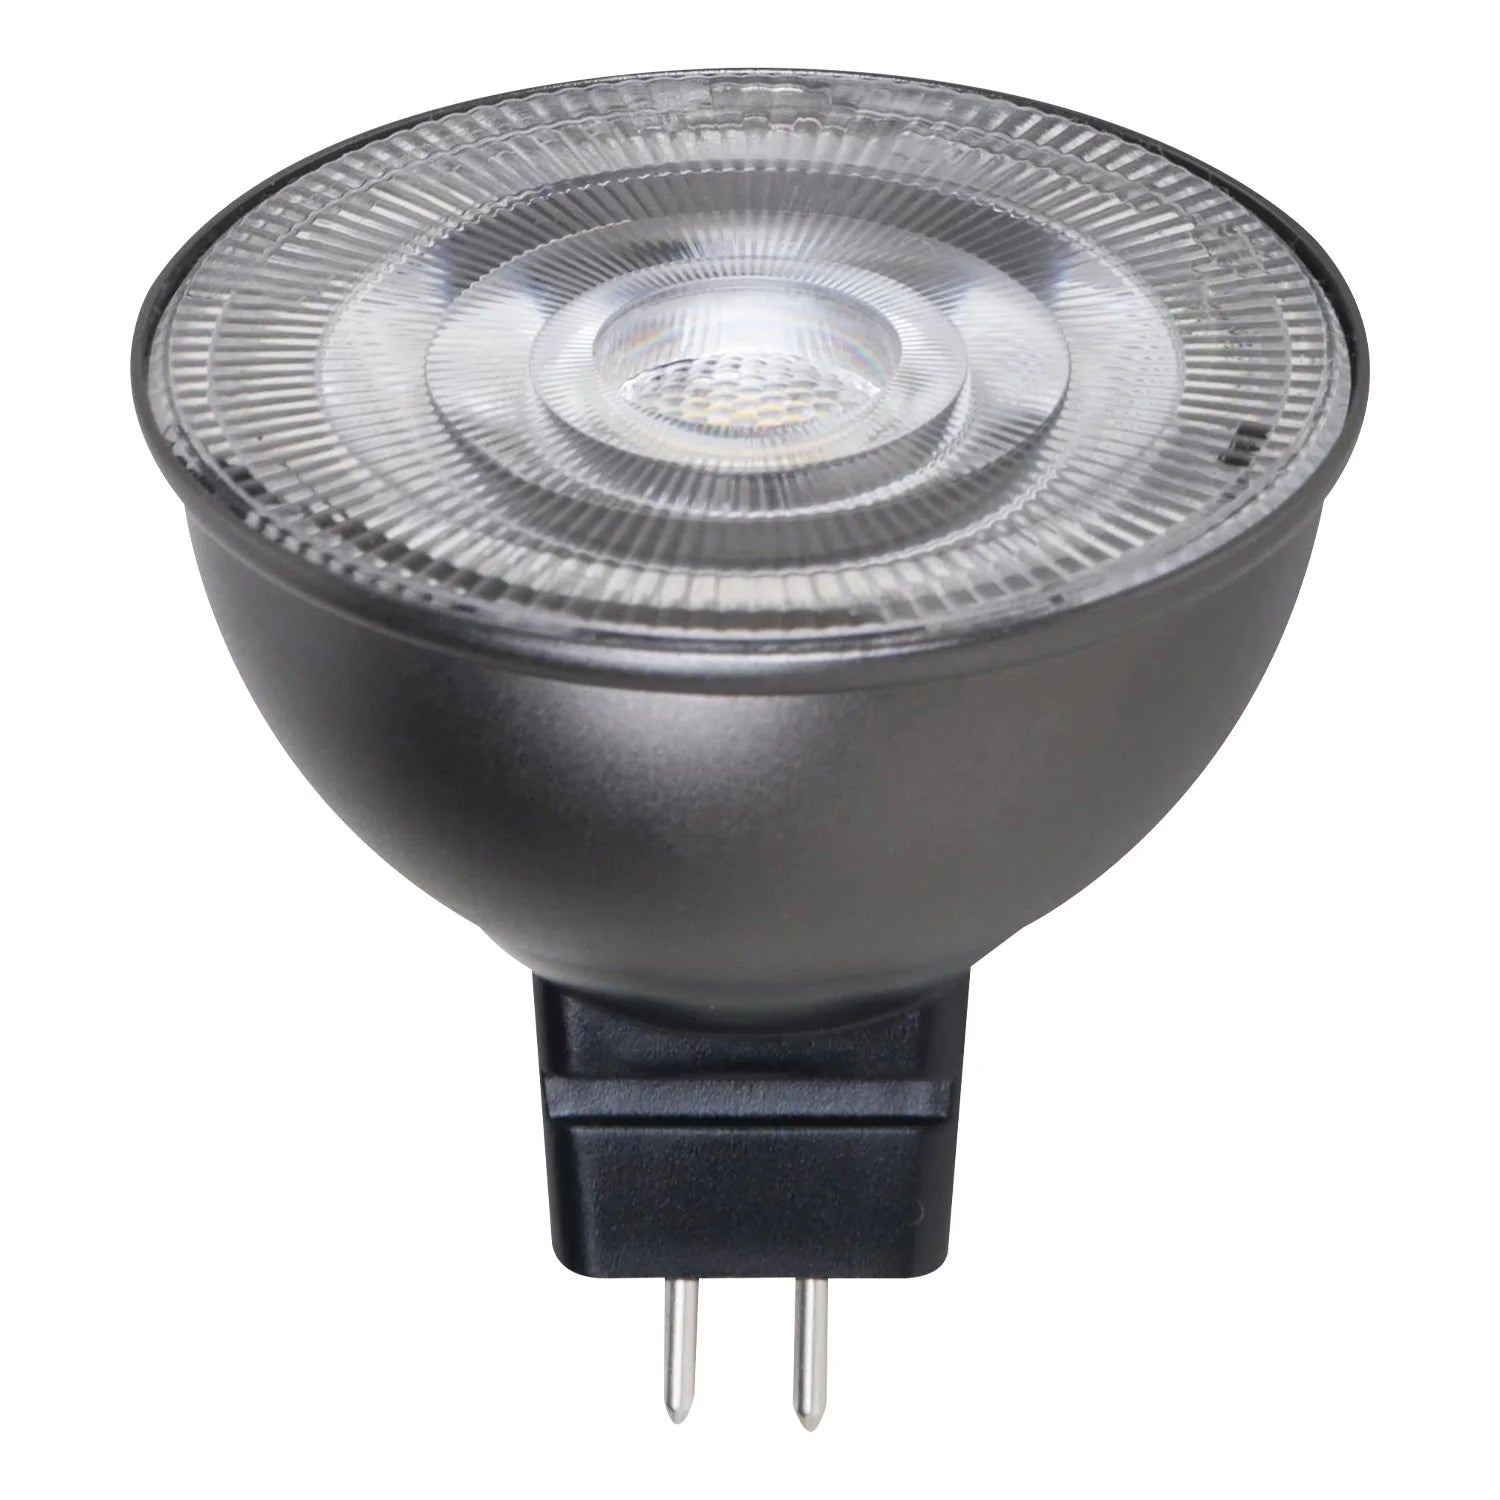 LHO 7 Watt NaturaLED MR16 LED Replacement Lamps